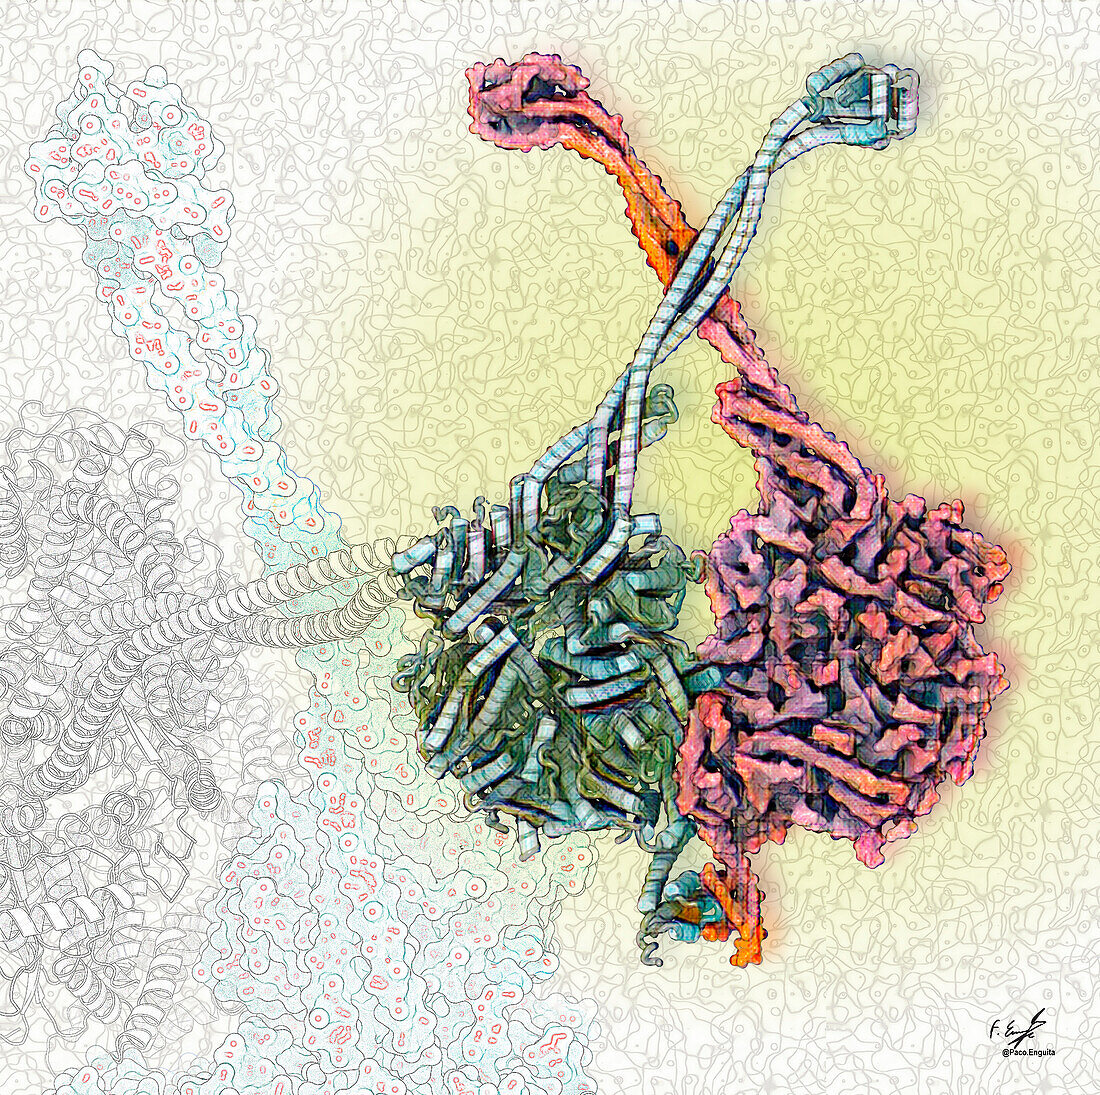 Dynein-1 motor domain, illustration